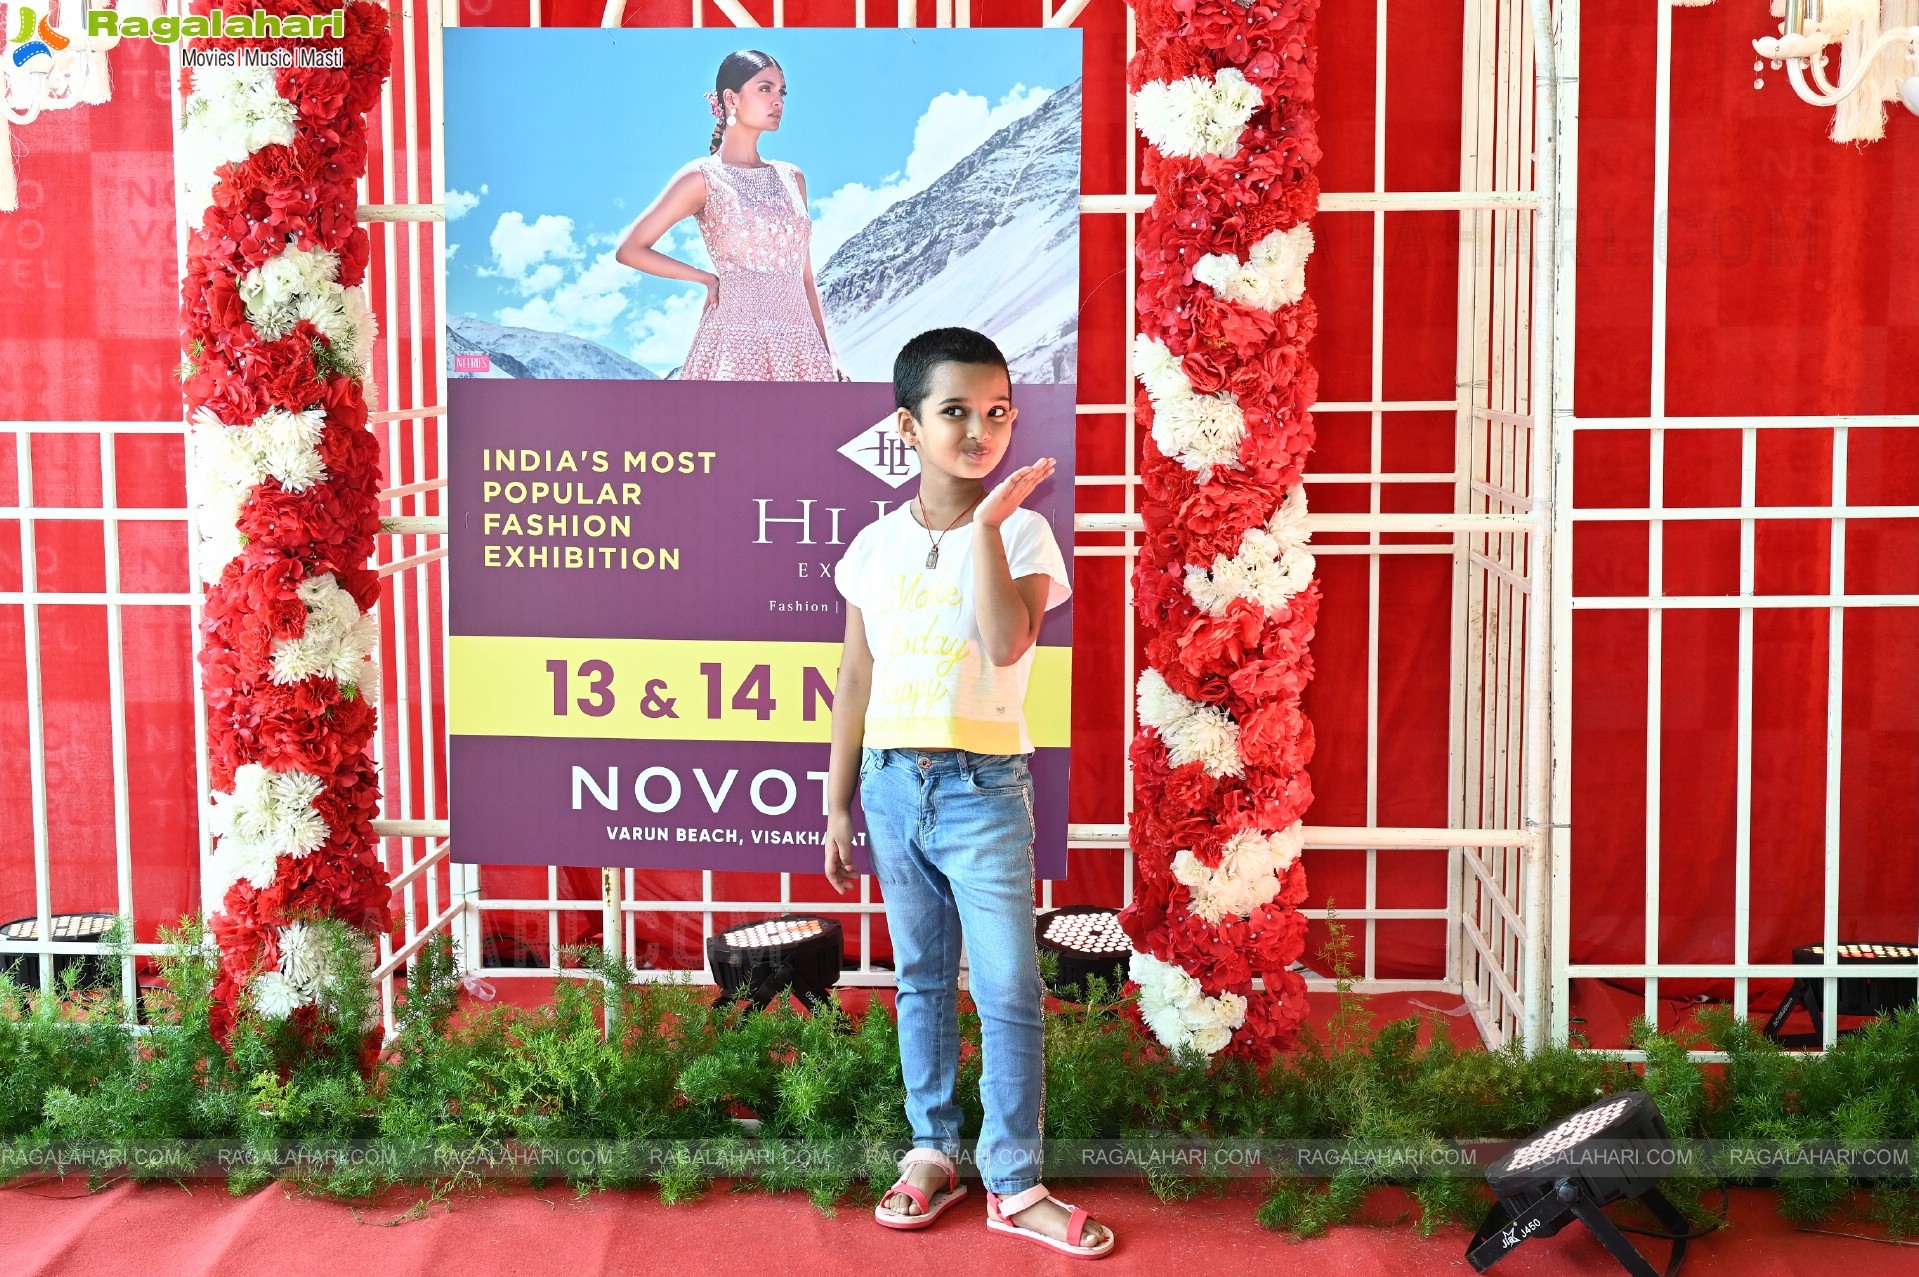 Hi Life Exhibition November 2022 Kicks Off at Novotel Varun Beach, Visakhapatnam